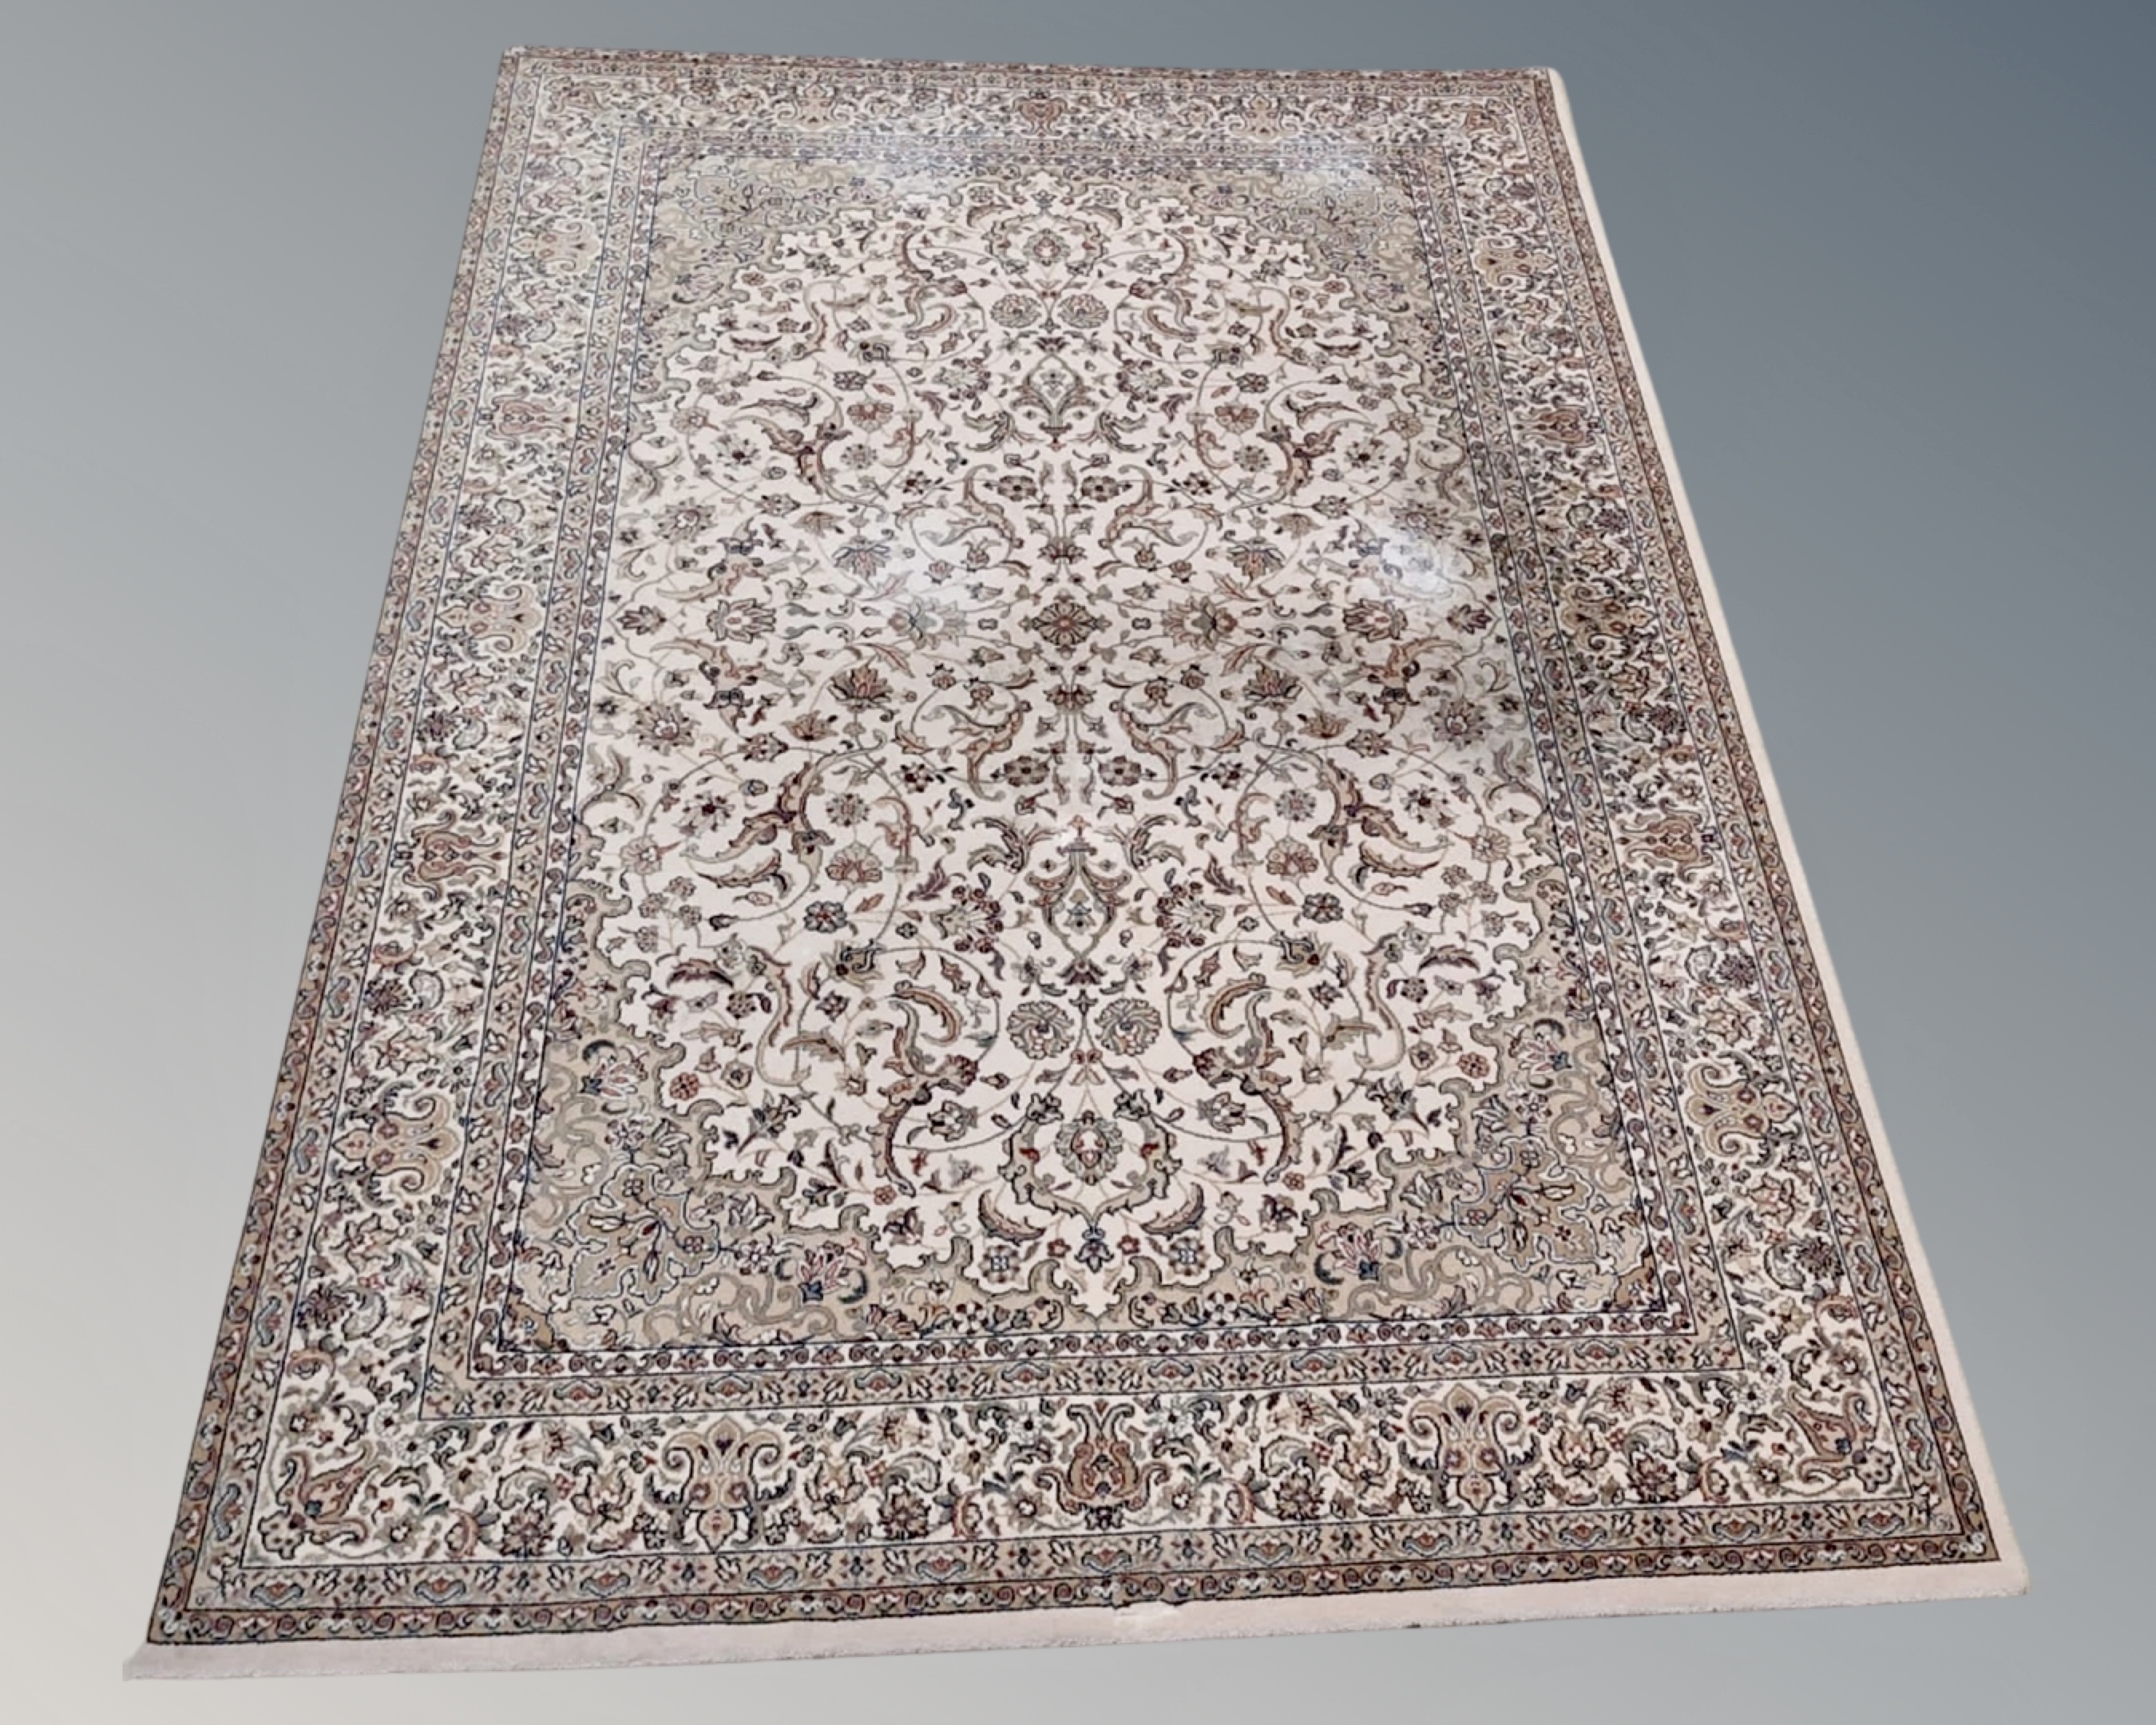 A machine made rug of Isfahan design, on cream ground,